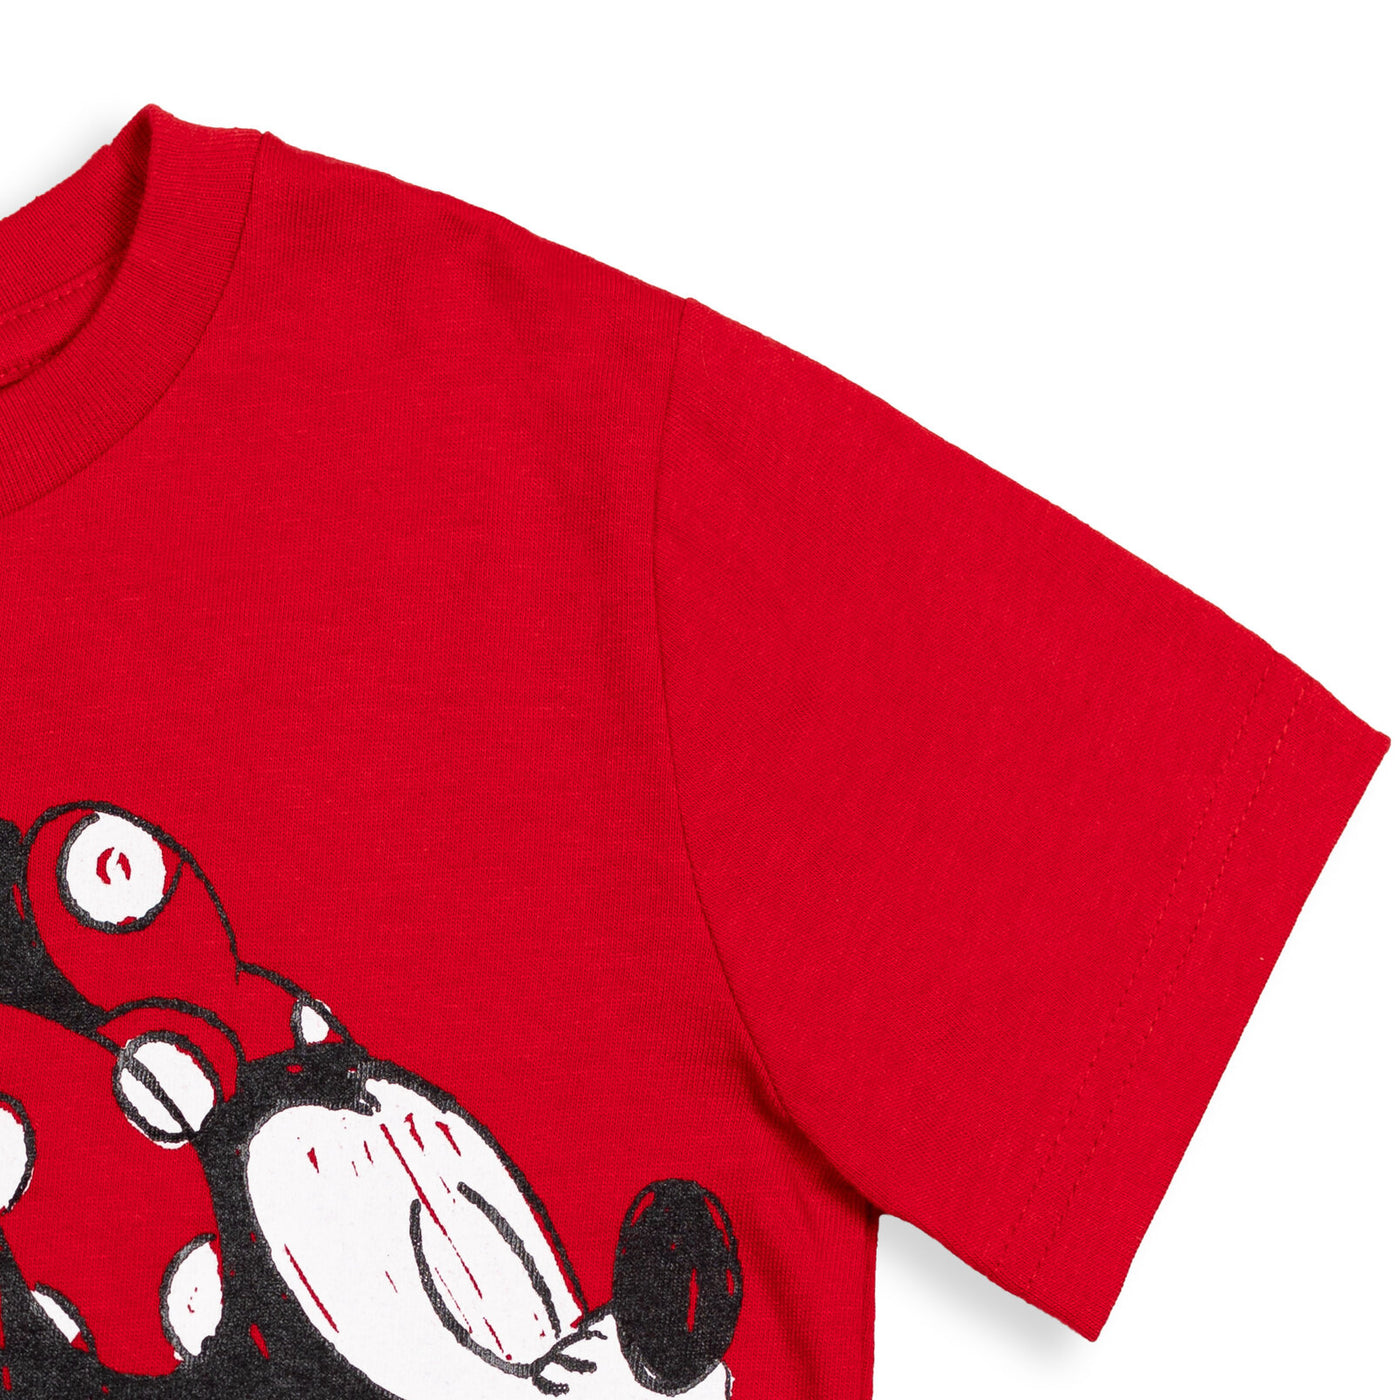 Disney Minnie Mouse T-Shirt